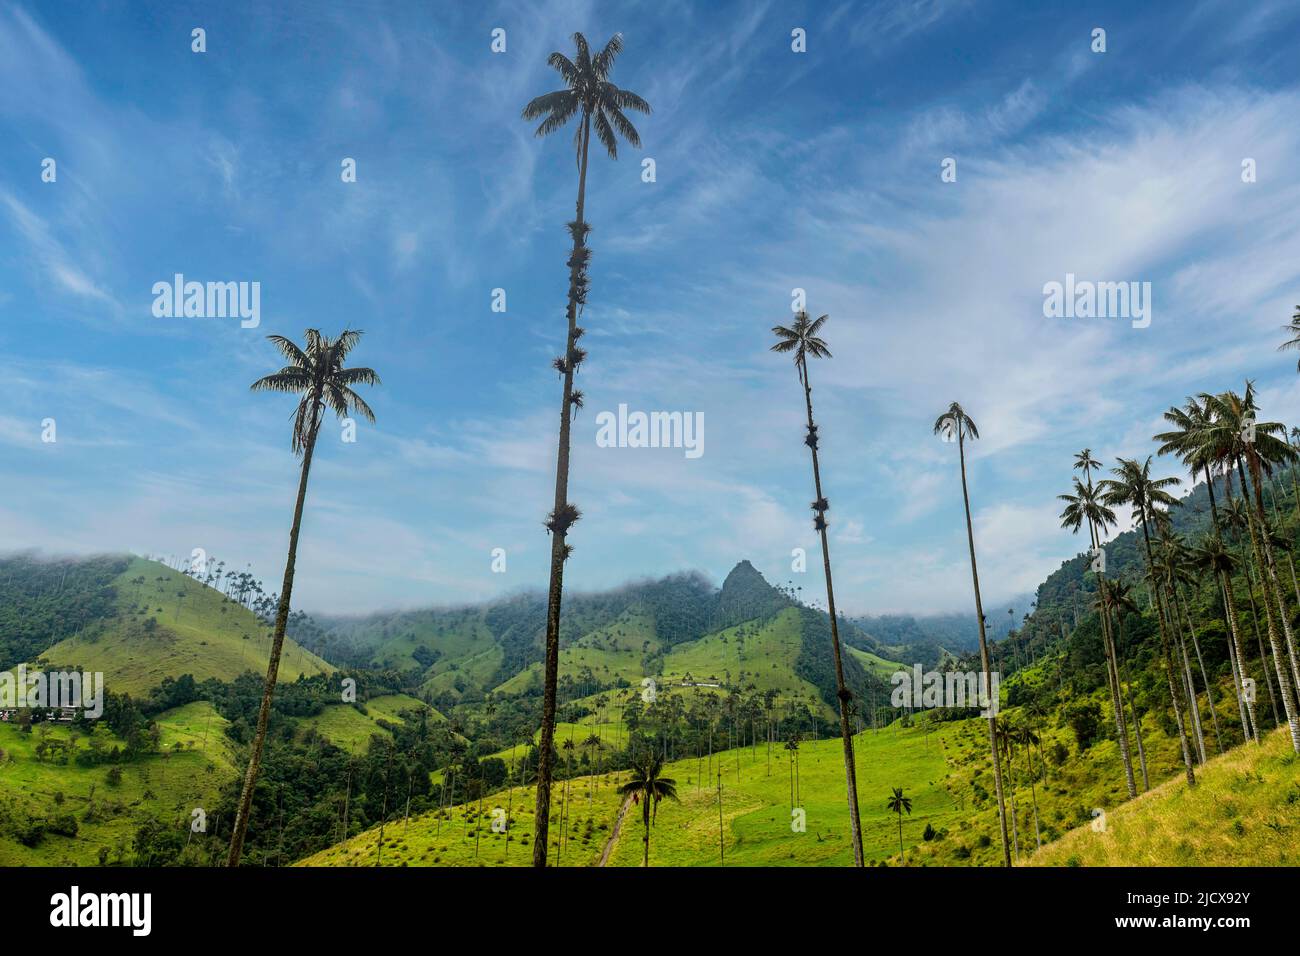 Wachspalmen, größte Palmen der Welt, Cocora Valley, UNESCO-Weltkulturerbe, Kaffee-Kulturlandschaft, Salento, Kolumbien, Südamerika Stockfoto